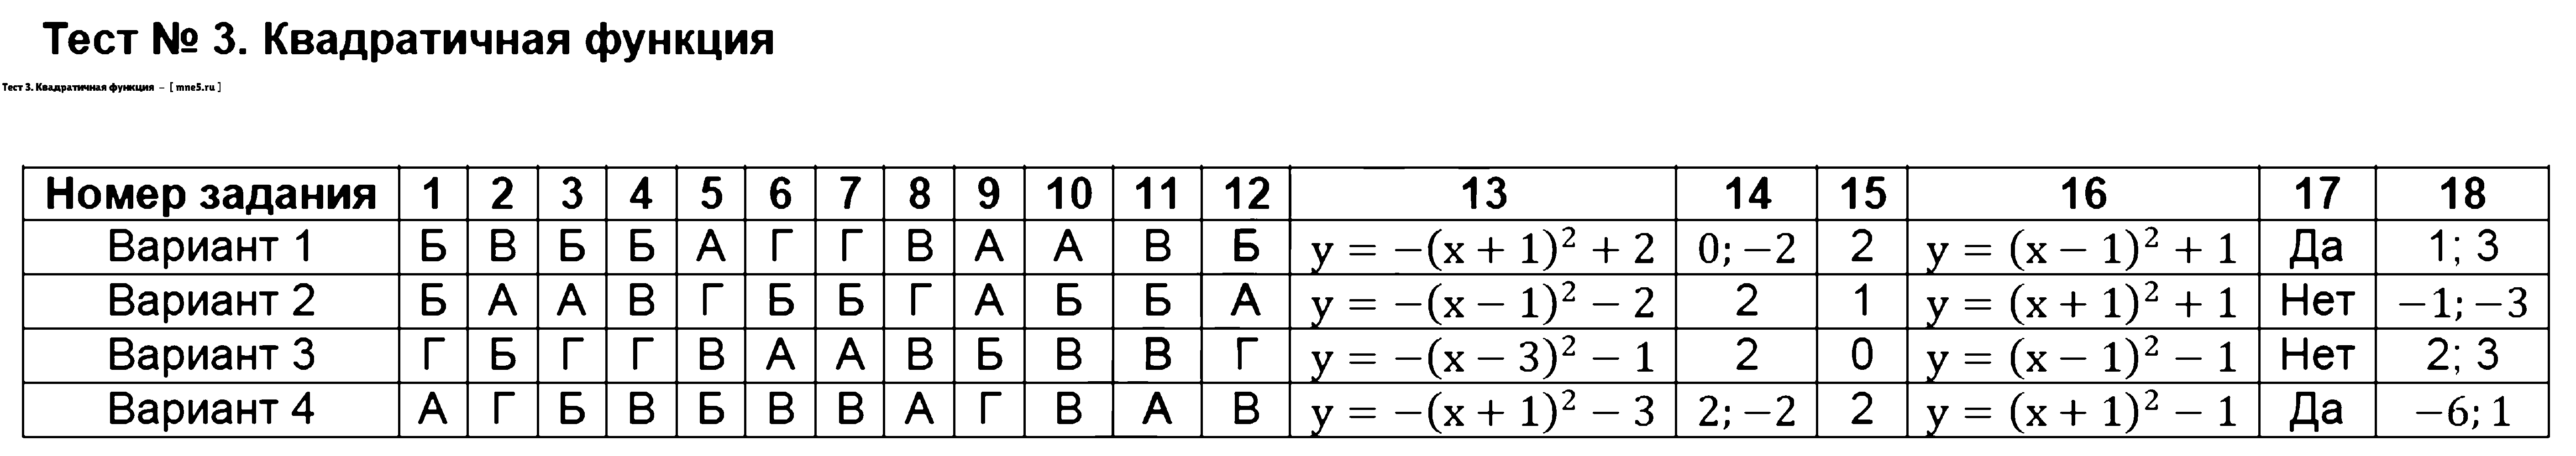 ГДЗ Алгебра 8 класс - Тест 3. Квадратичная функция